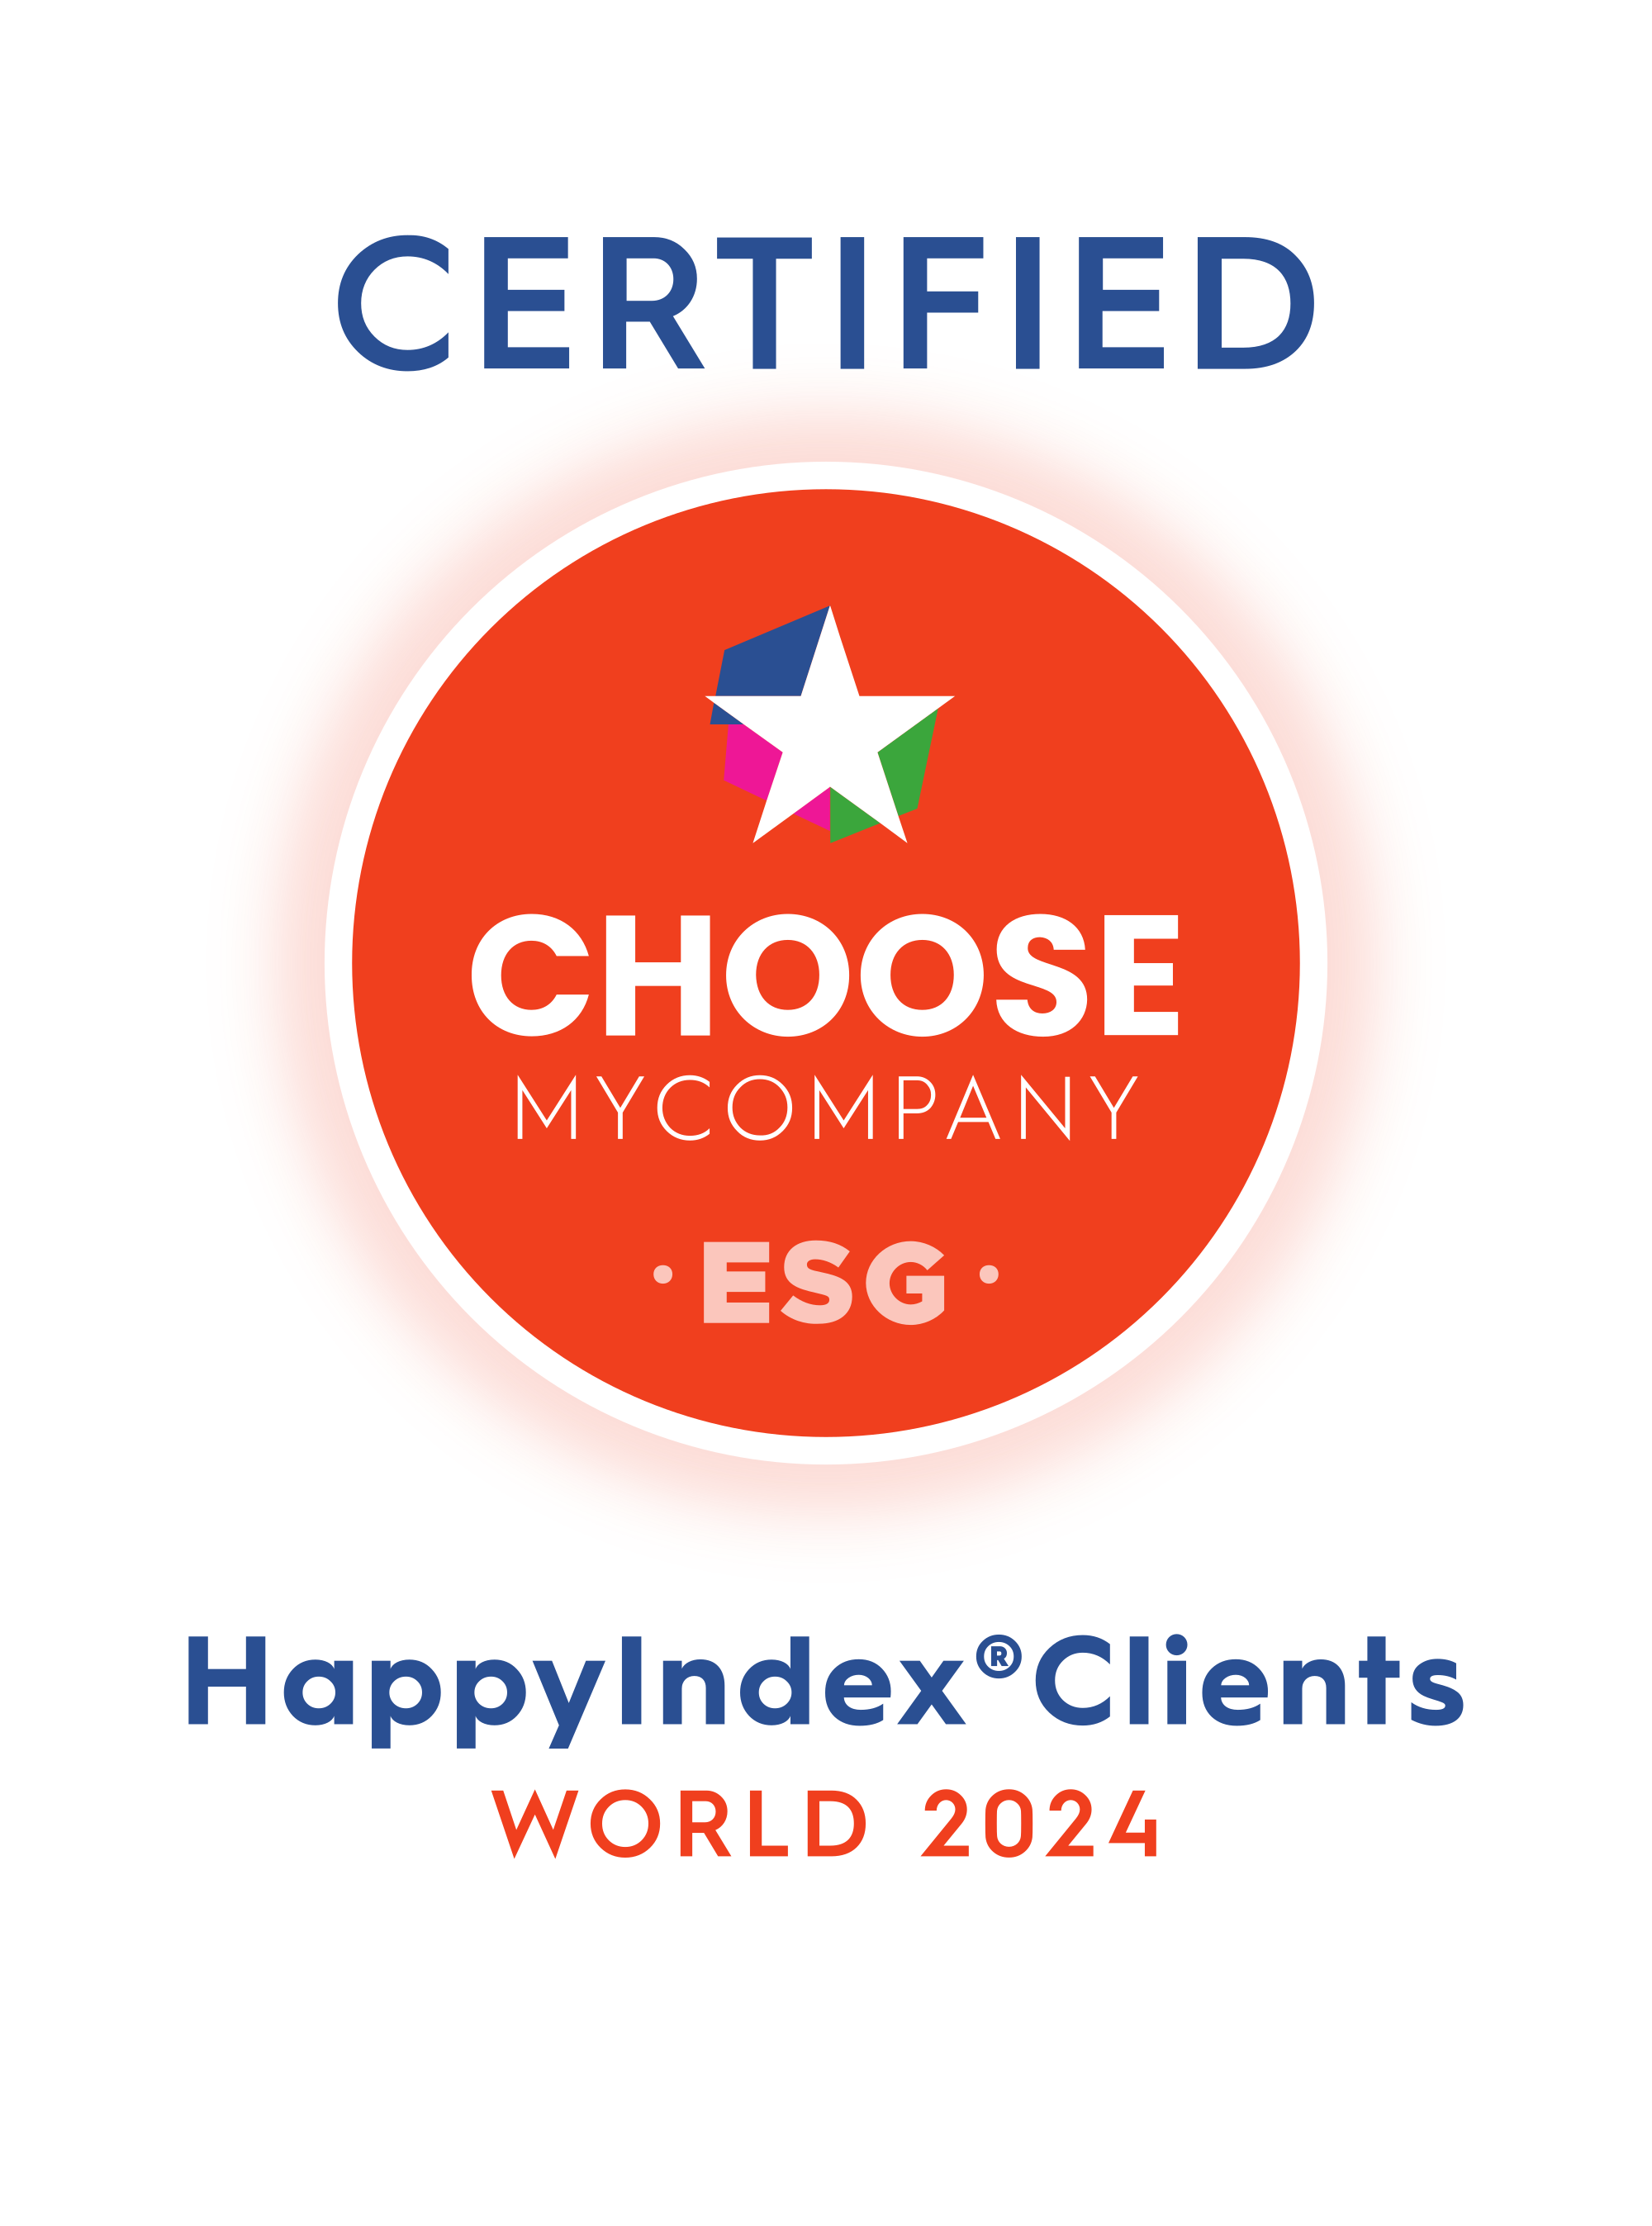 LumApps Awarded the Prestigious HappyIndex®Clients World 2024 Label by ChooseMyCompany 